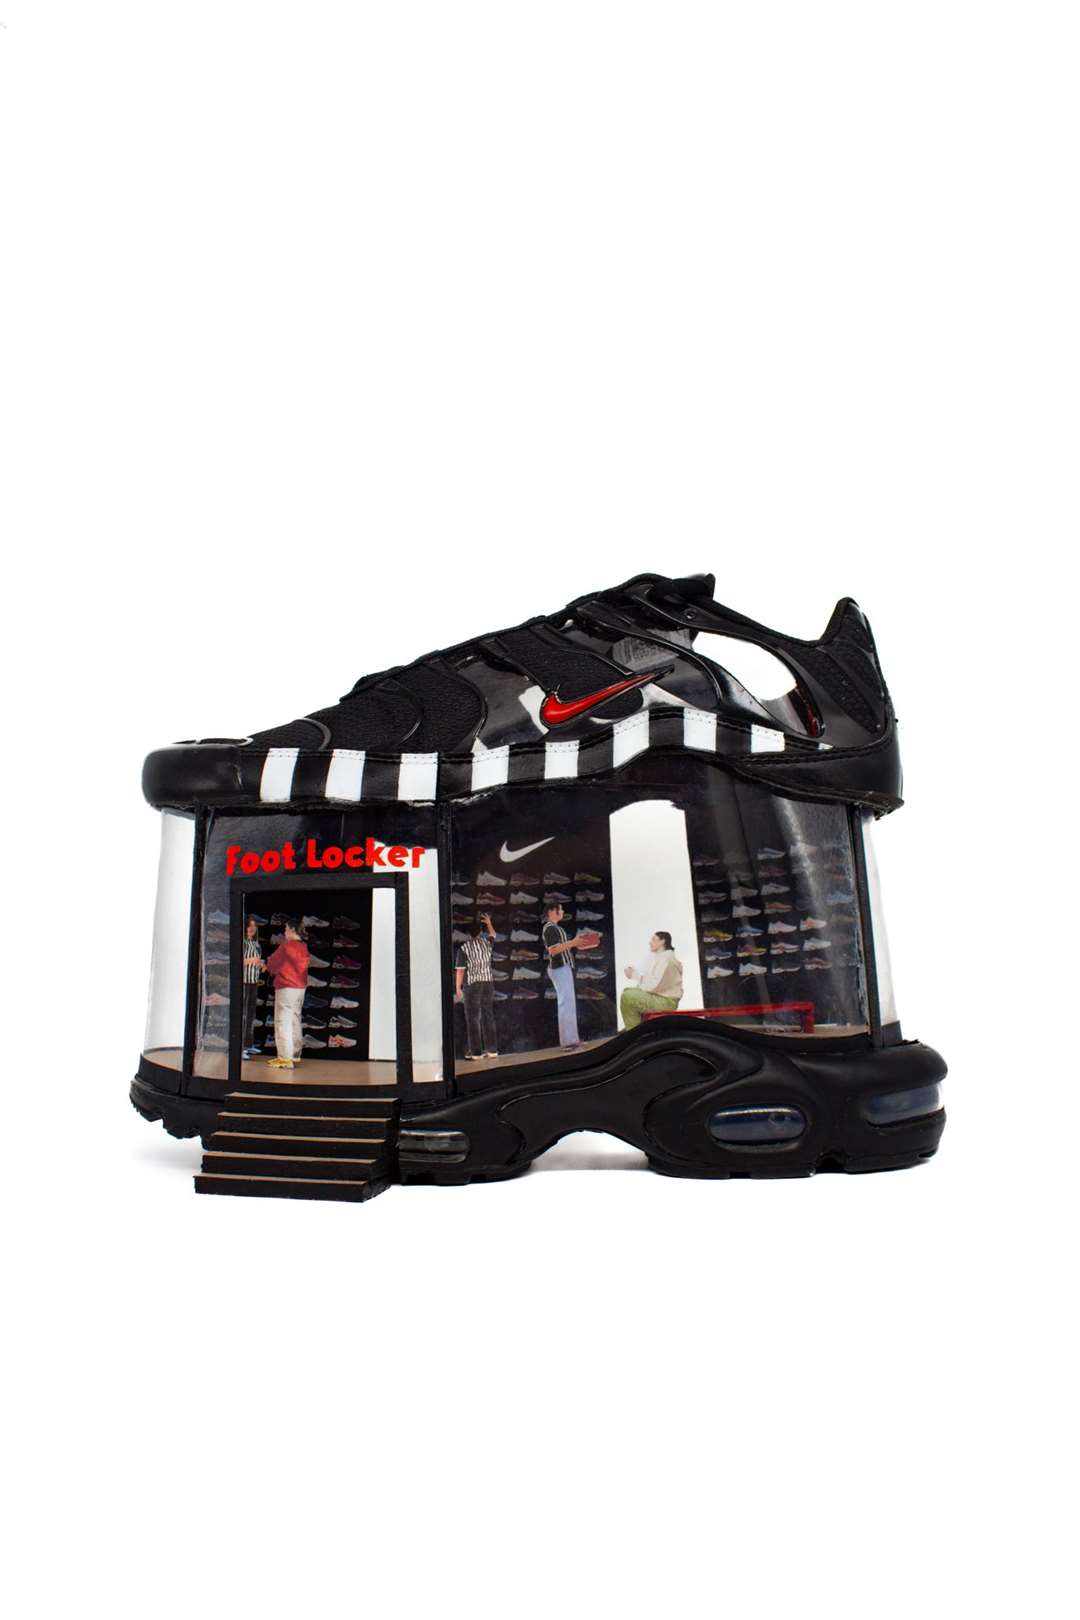 Ms Stockbridge recreated a miniature version of a Footlocker store inside a Nike trainer (Stella Stockbridge)